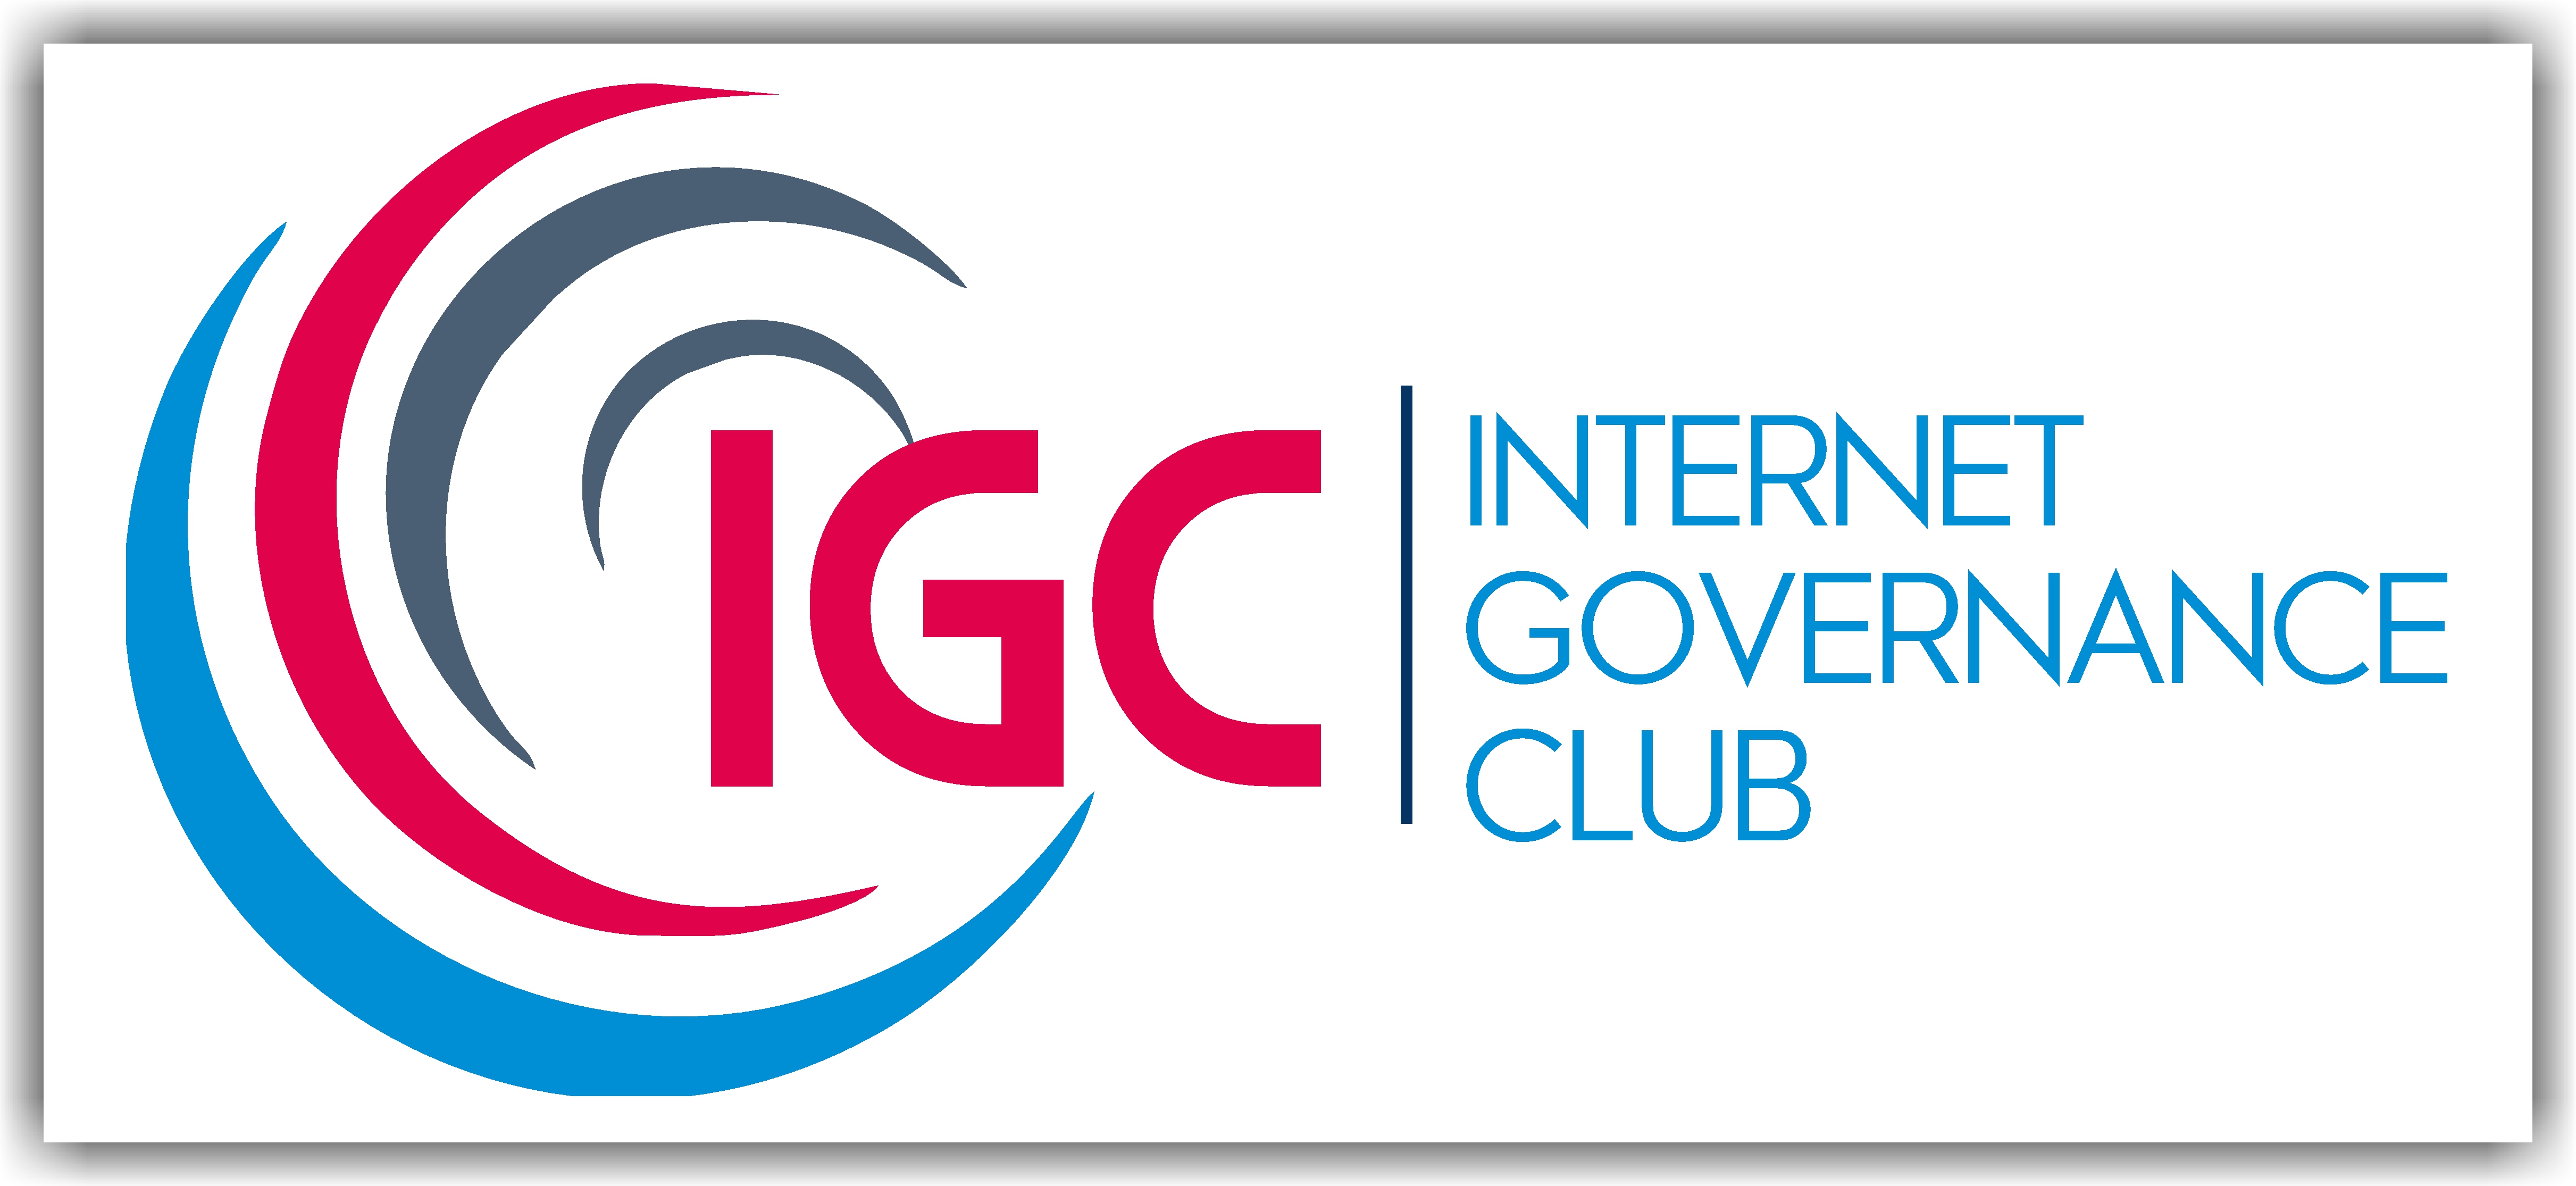 Copy of Internet Governance Club2